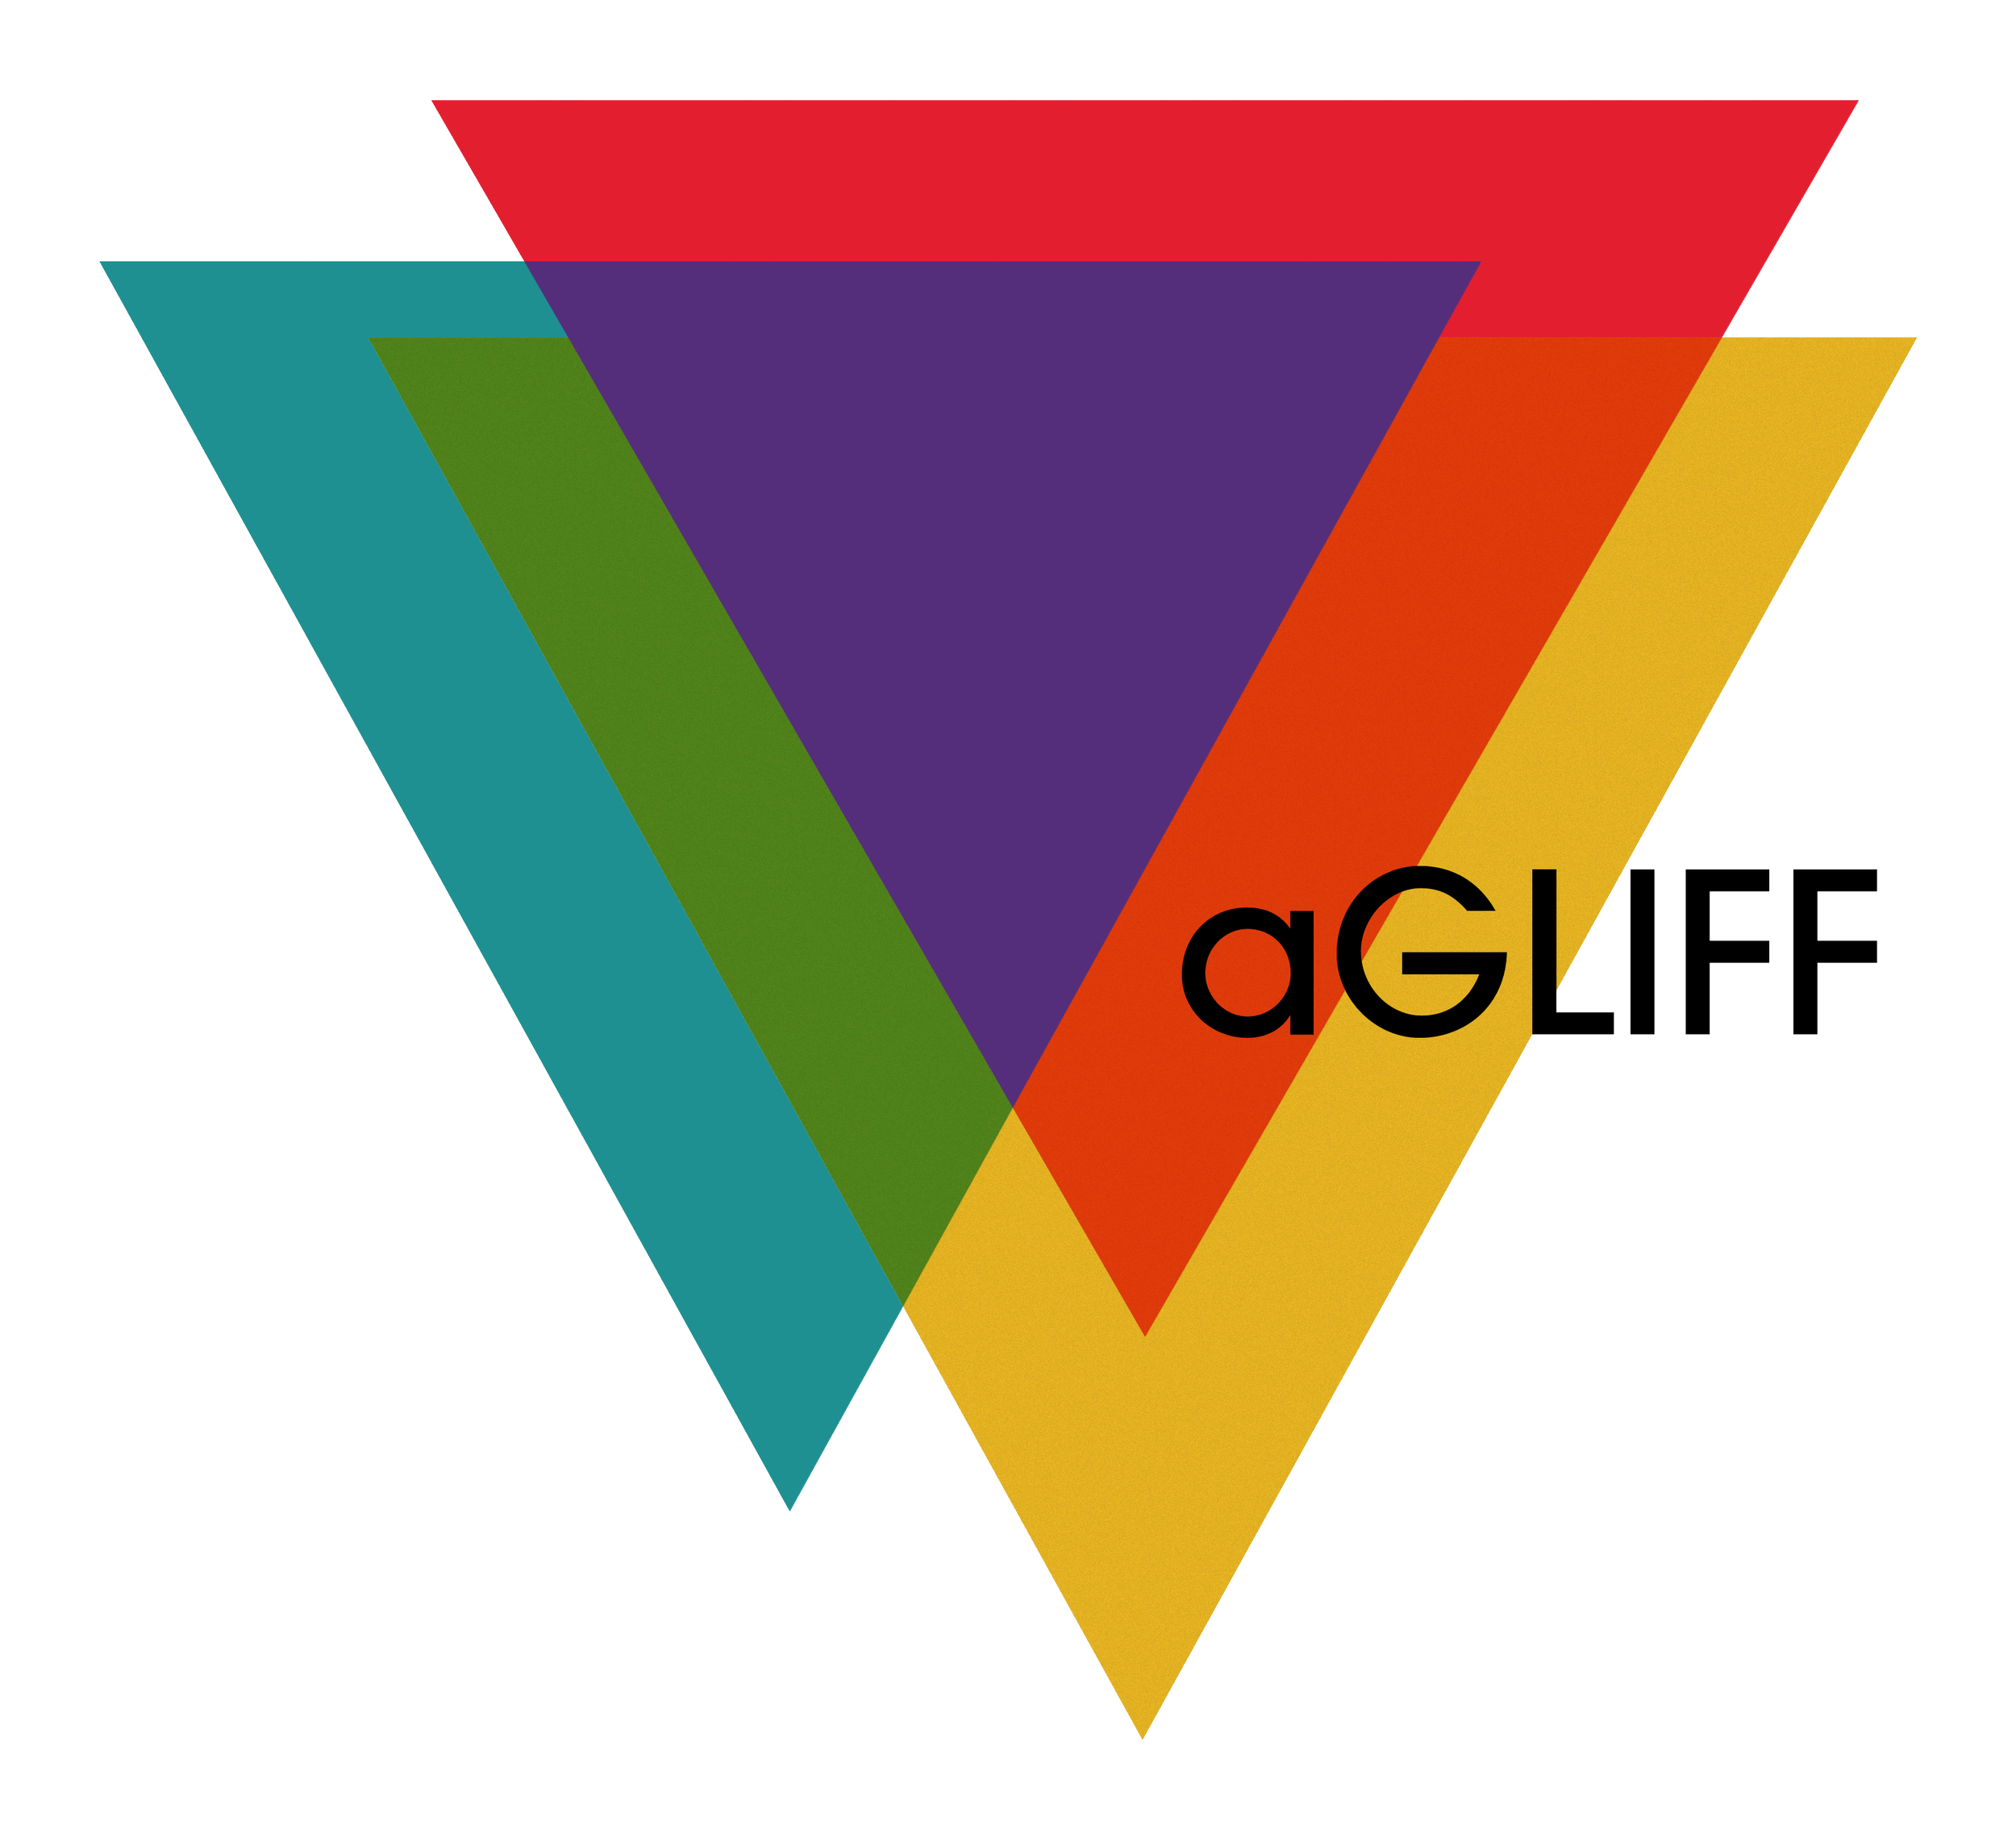 Agliff_Tri_Logo.png